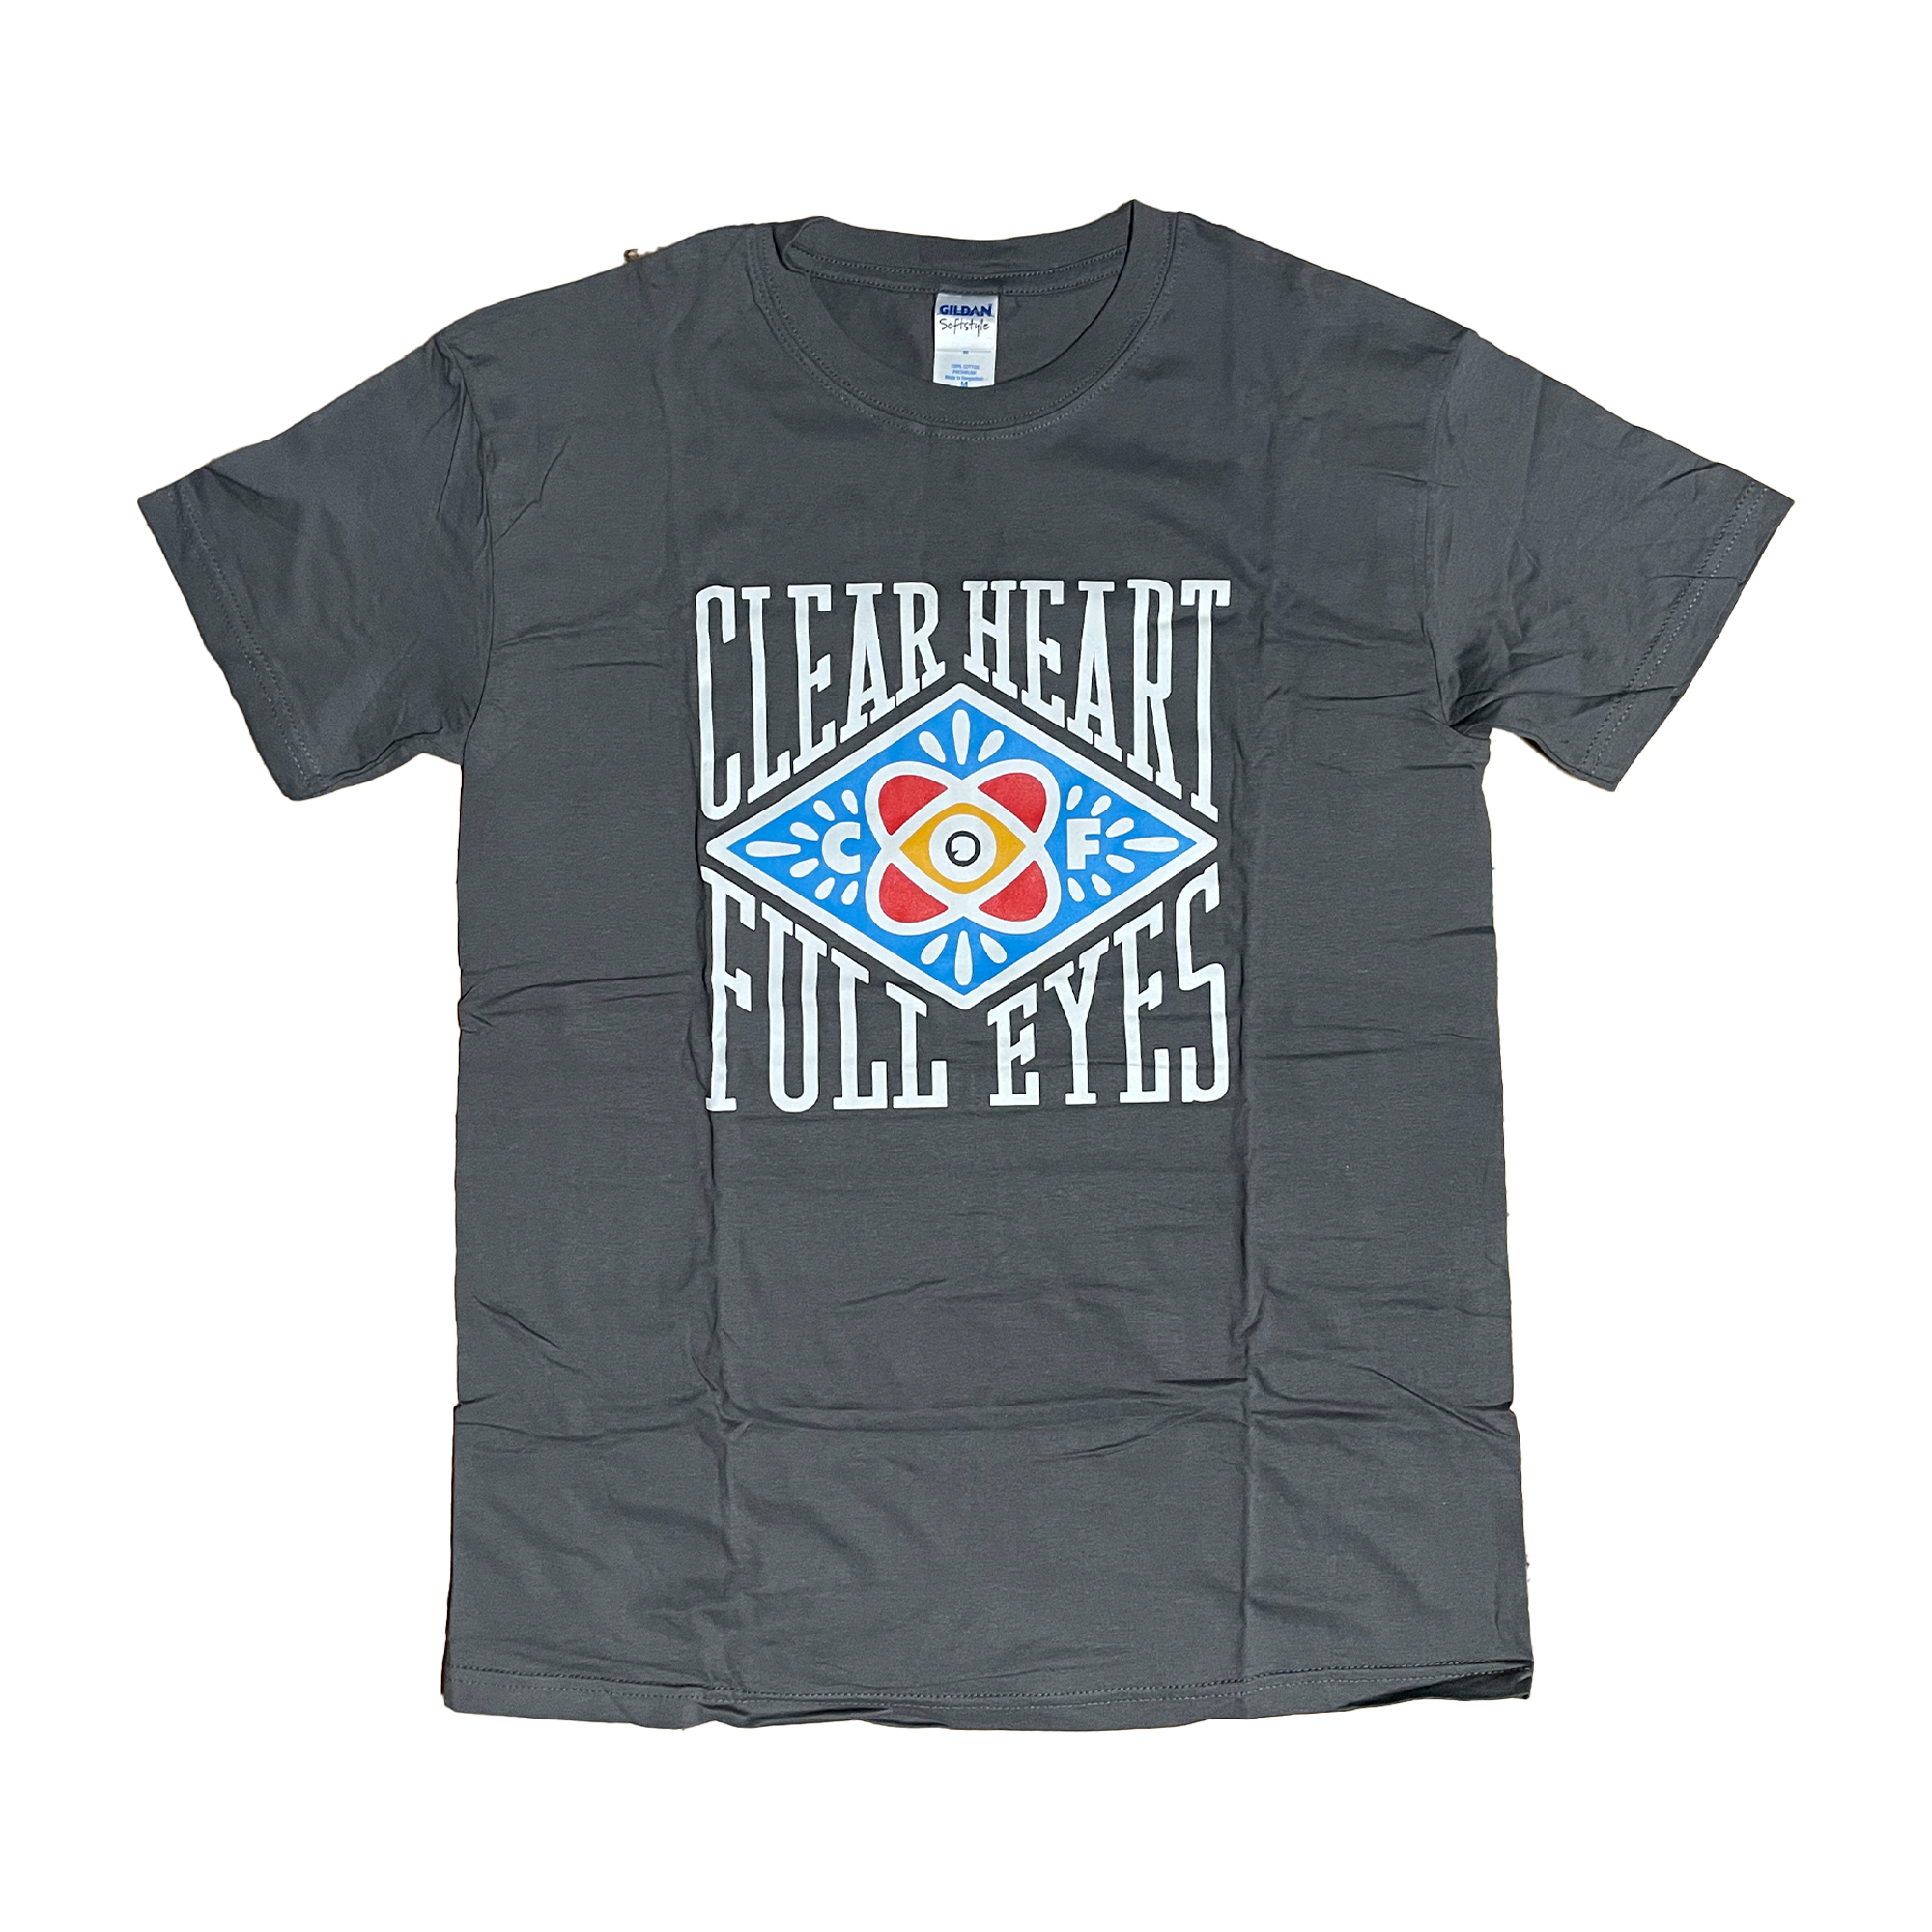 Craig Finn - Clear Heart Full Eyes Shirt (Charcoal)